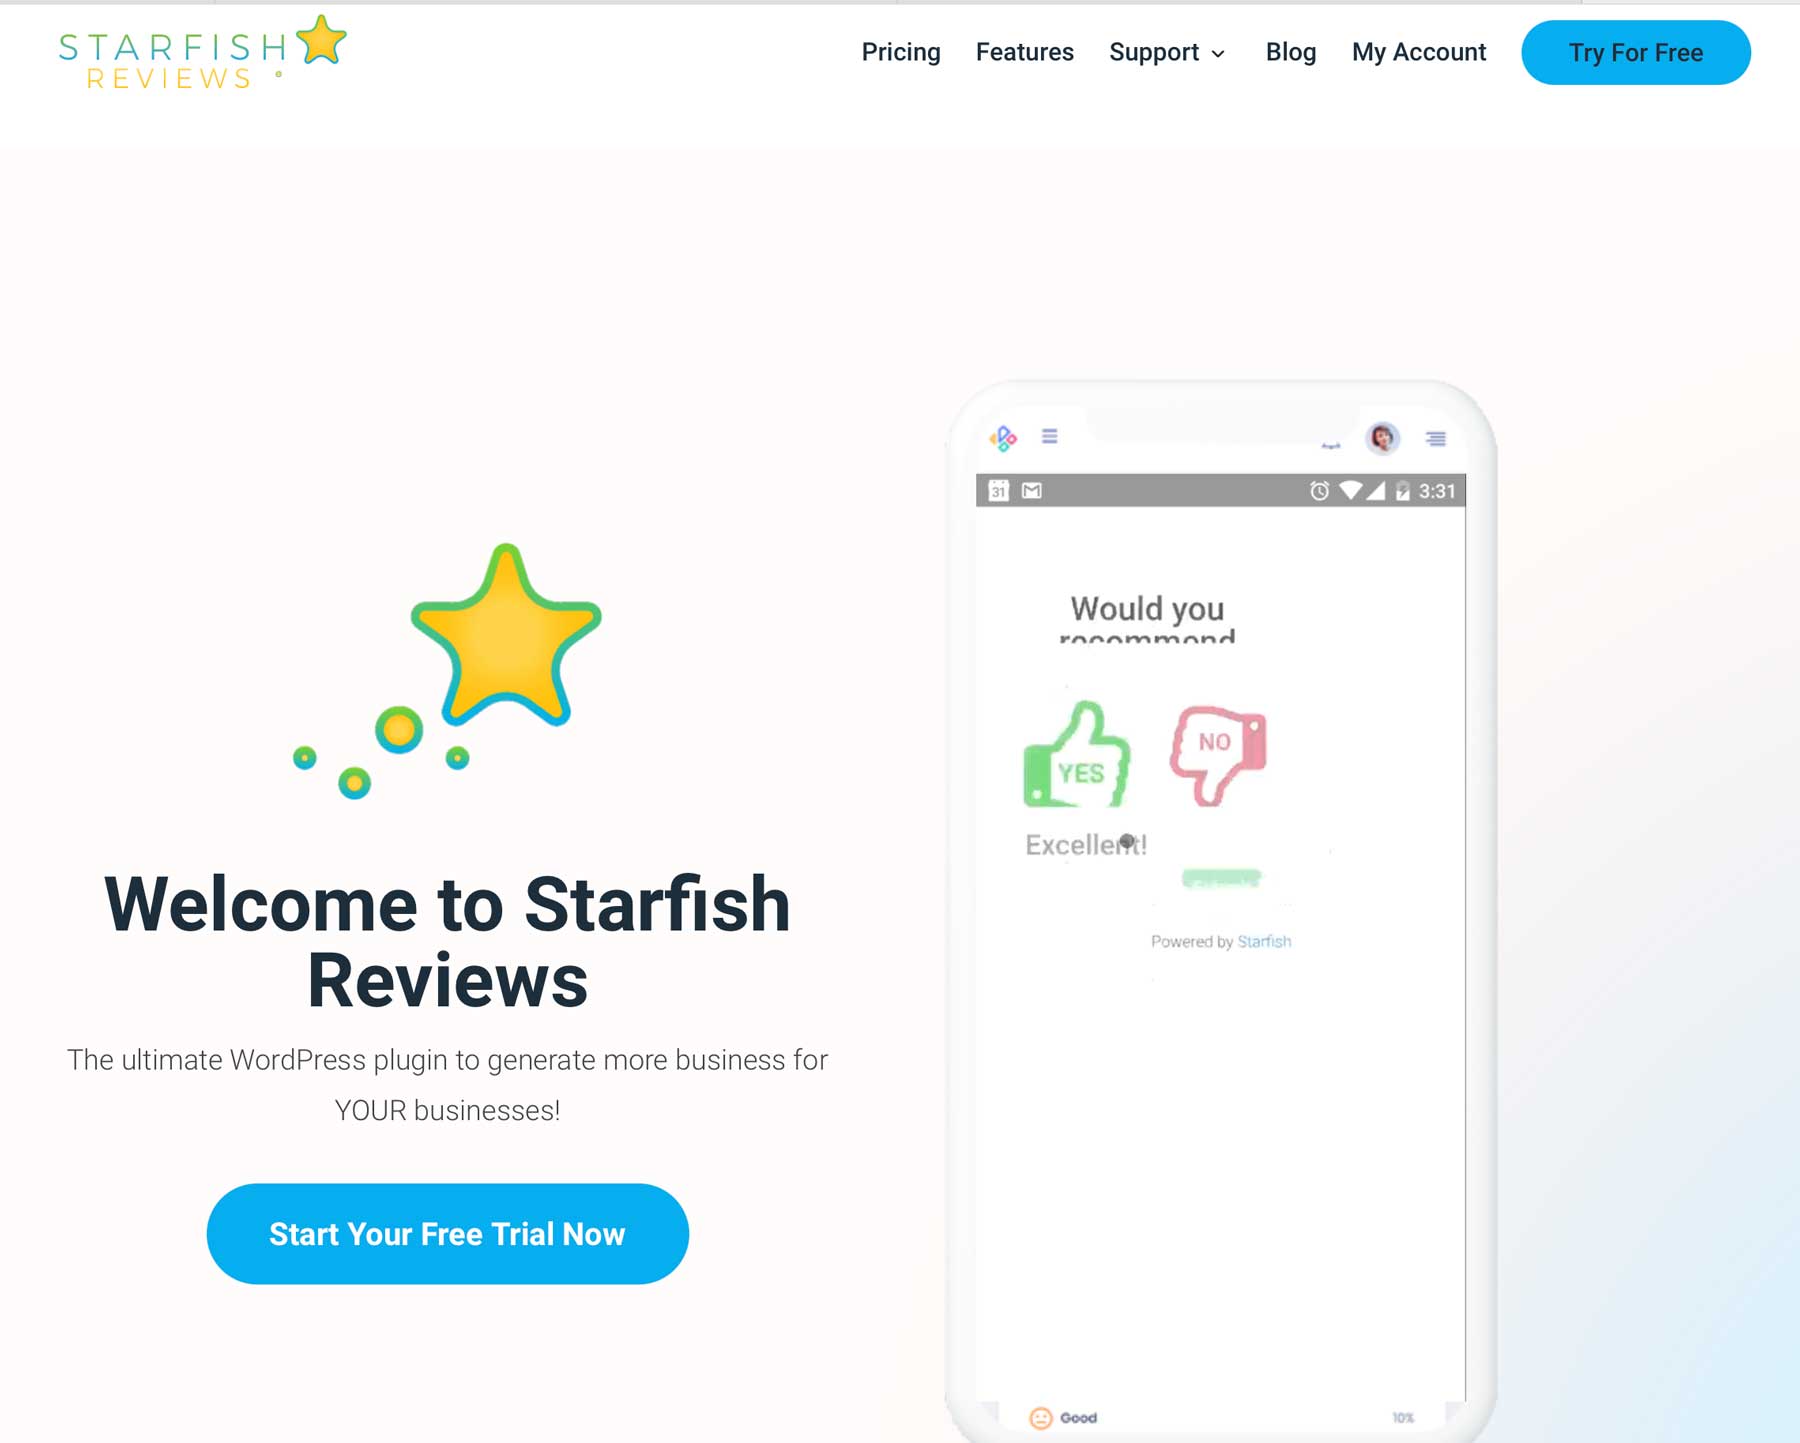 Starfist Reviews best WordPress review plugin